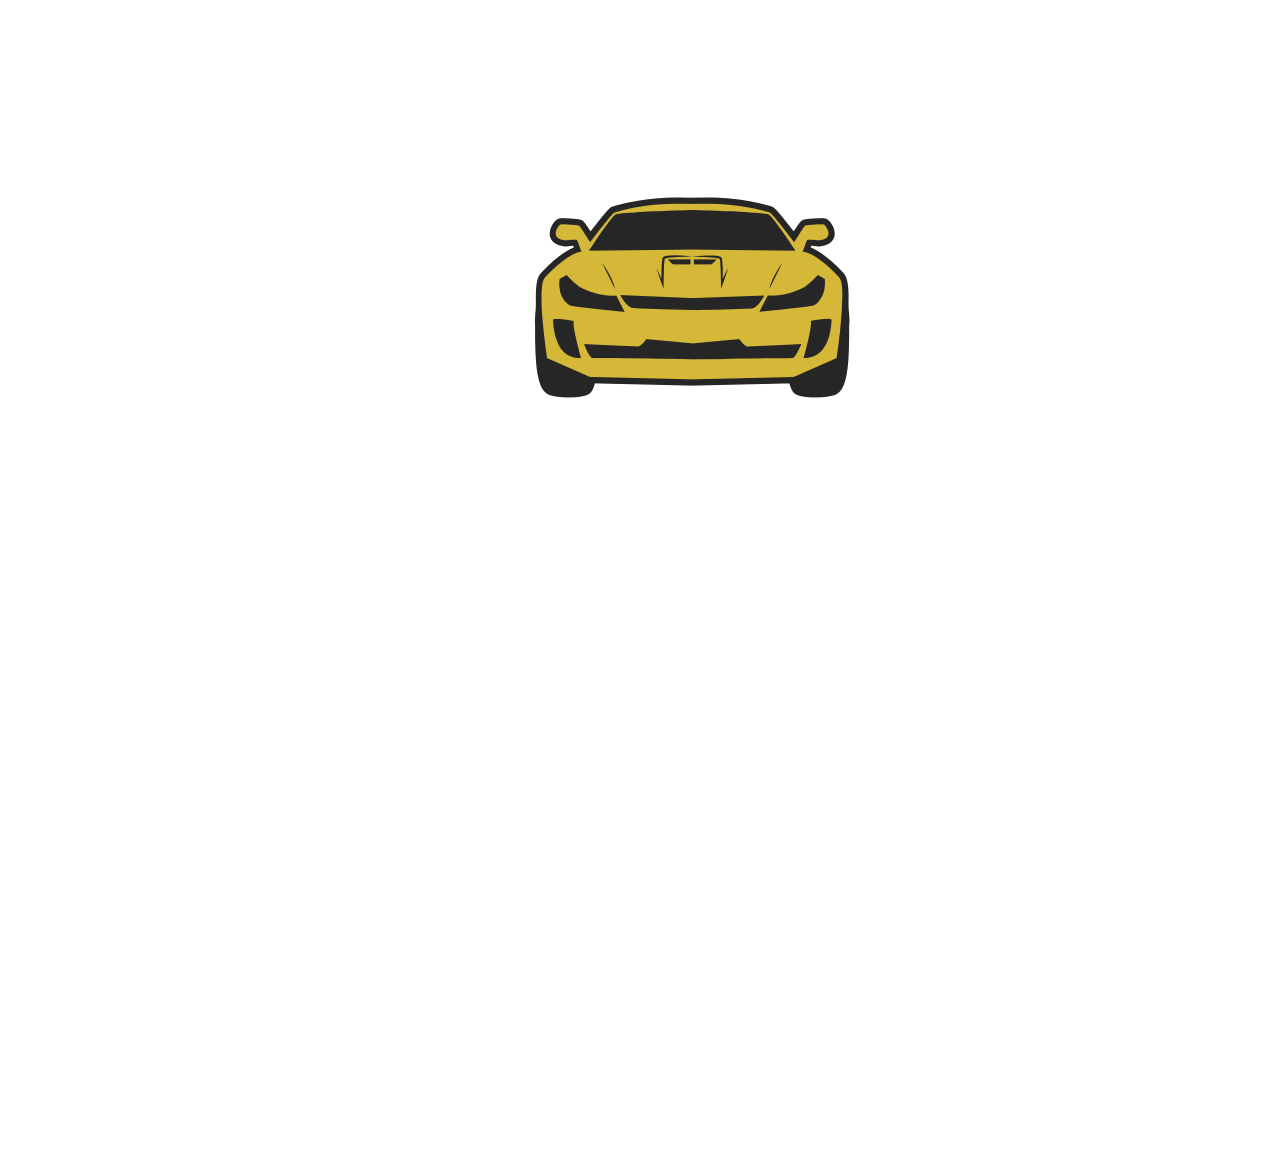 CHRIS EADS 's web page